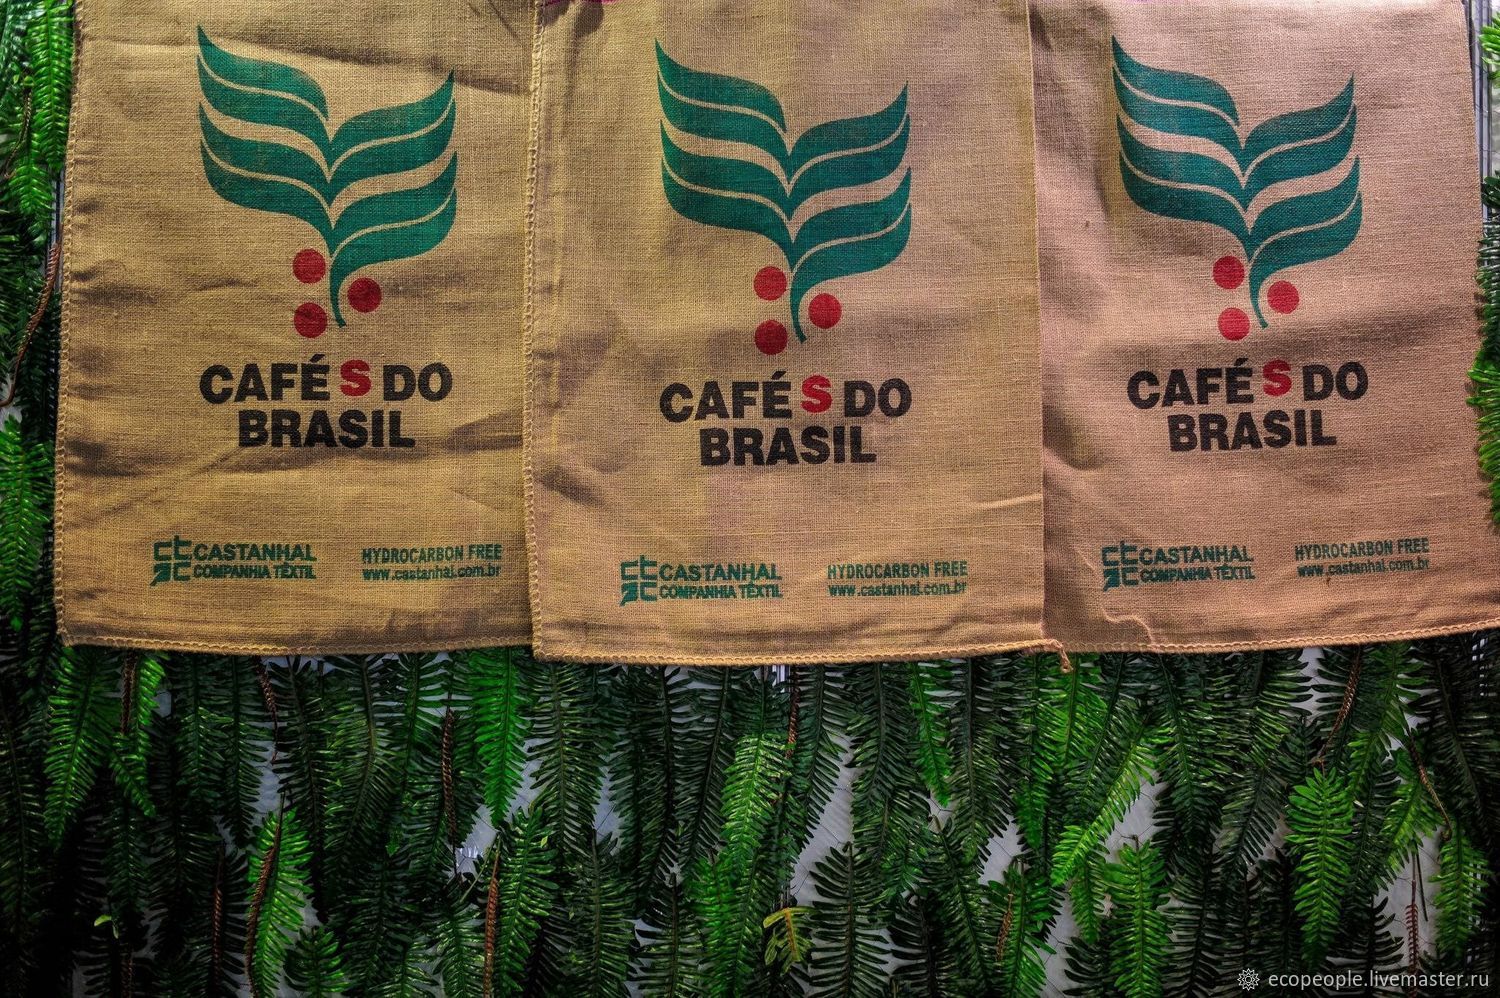 Cafe do Brasil